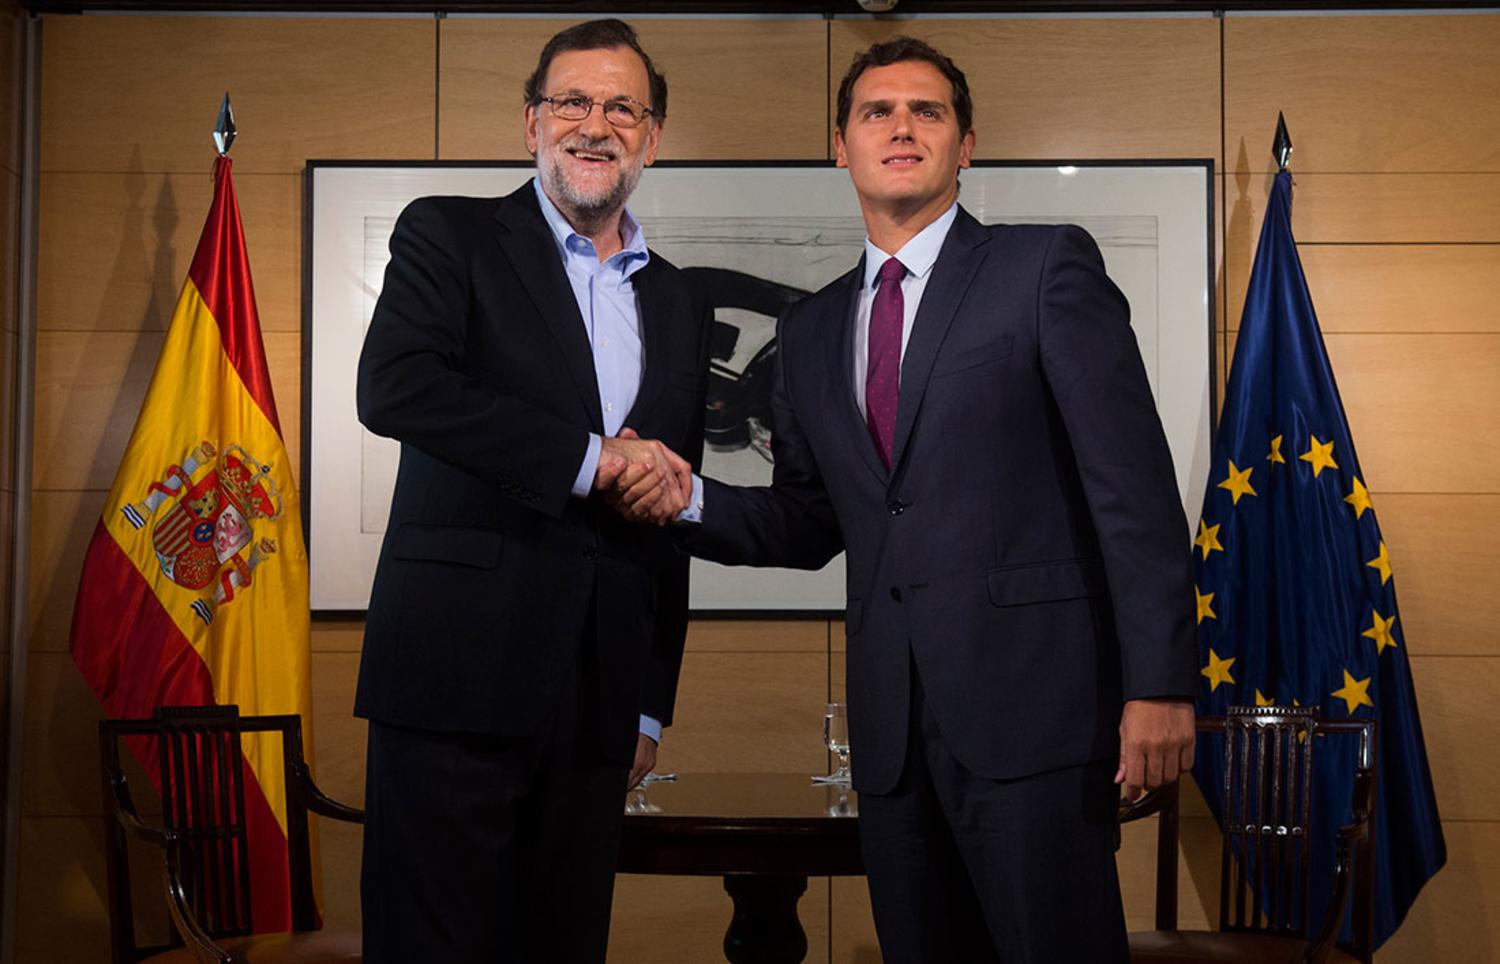 https://www.elsaltodiario.com/uploads/fotos/r1500/042811d5/Rajoy_Rivera_Reunion_PP.jpg?v=63684439655